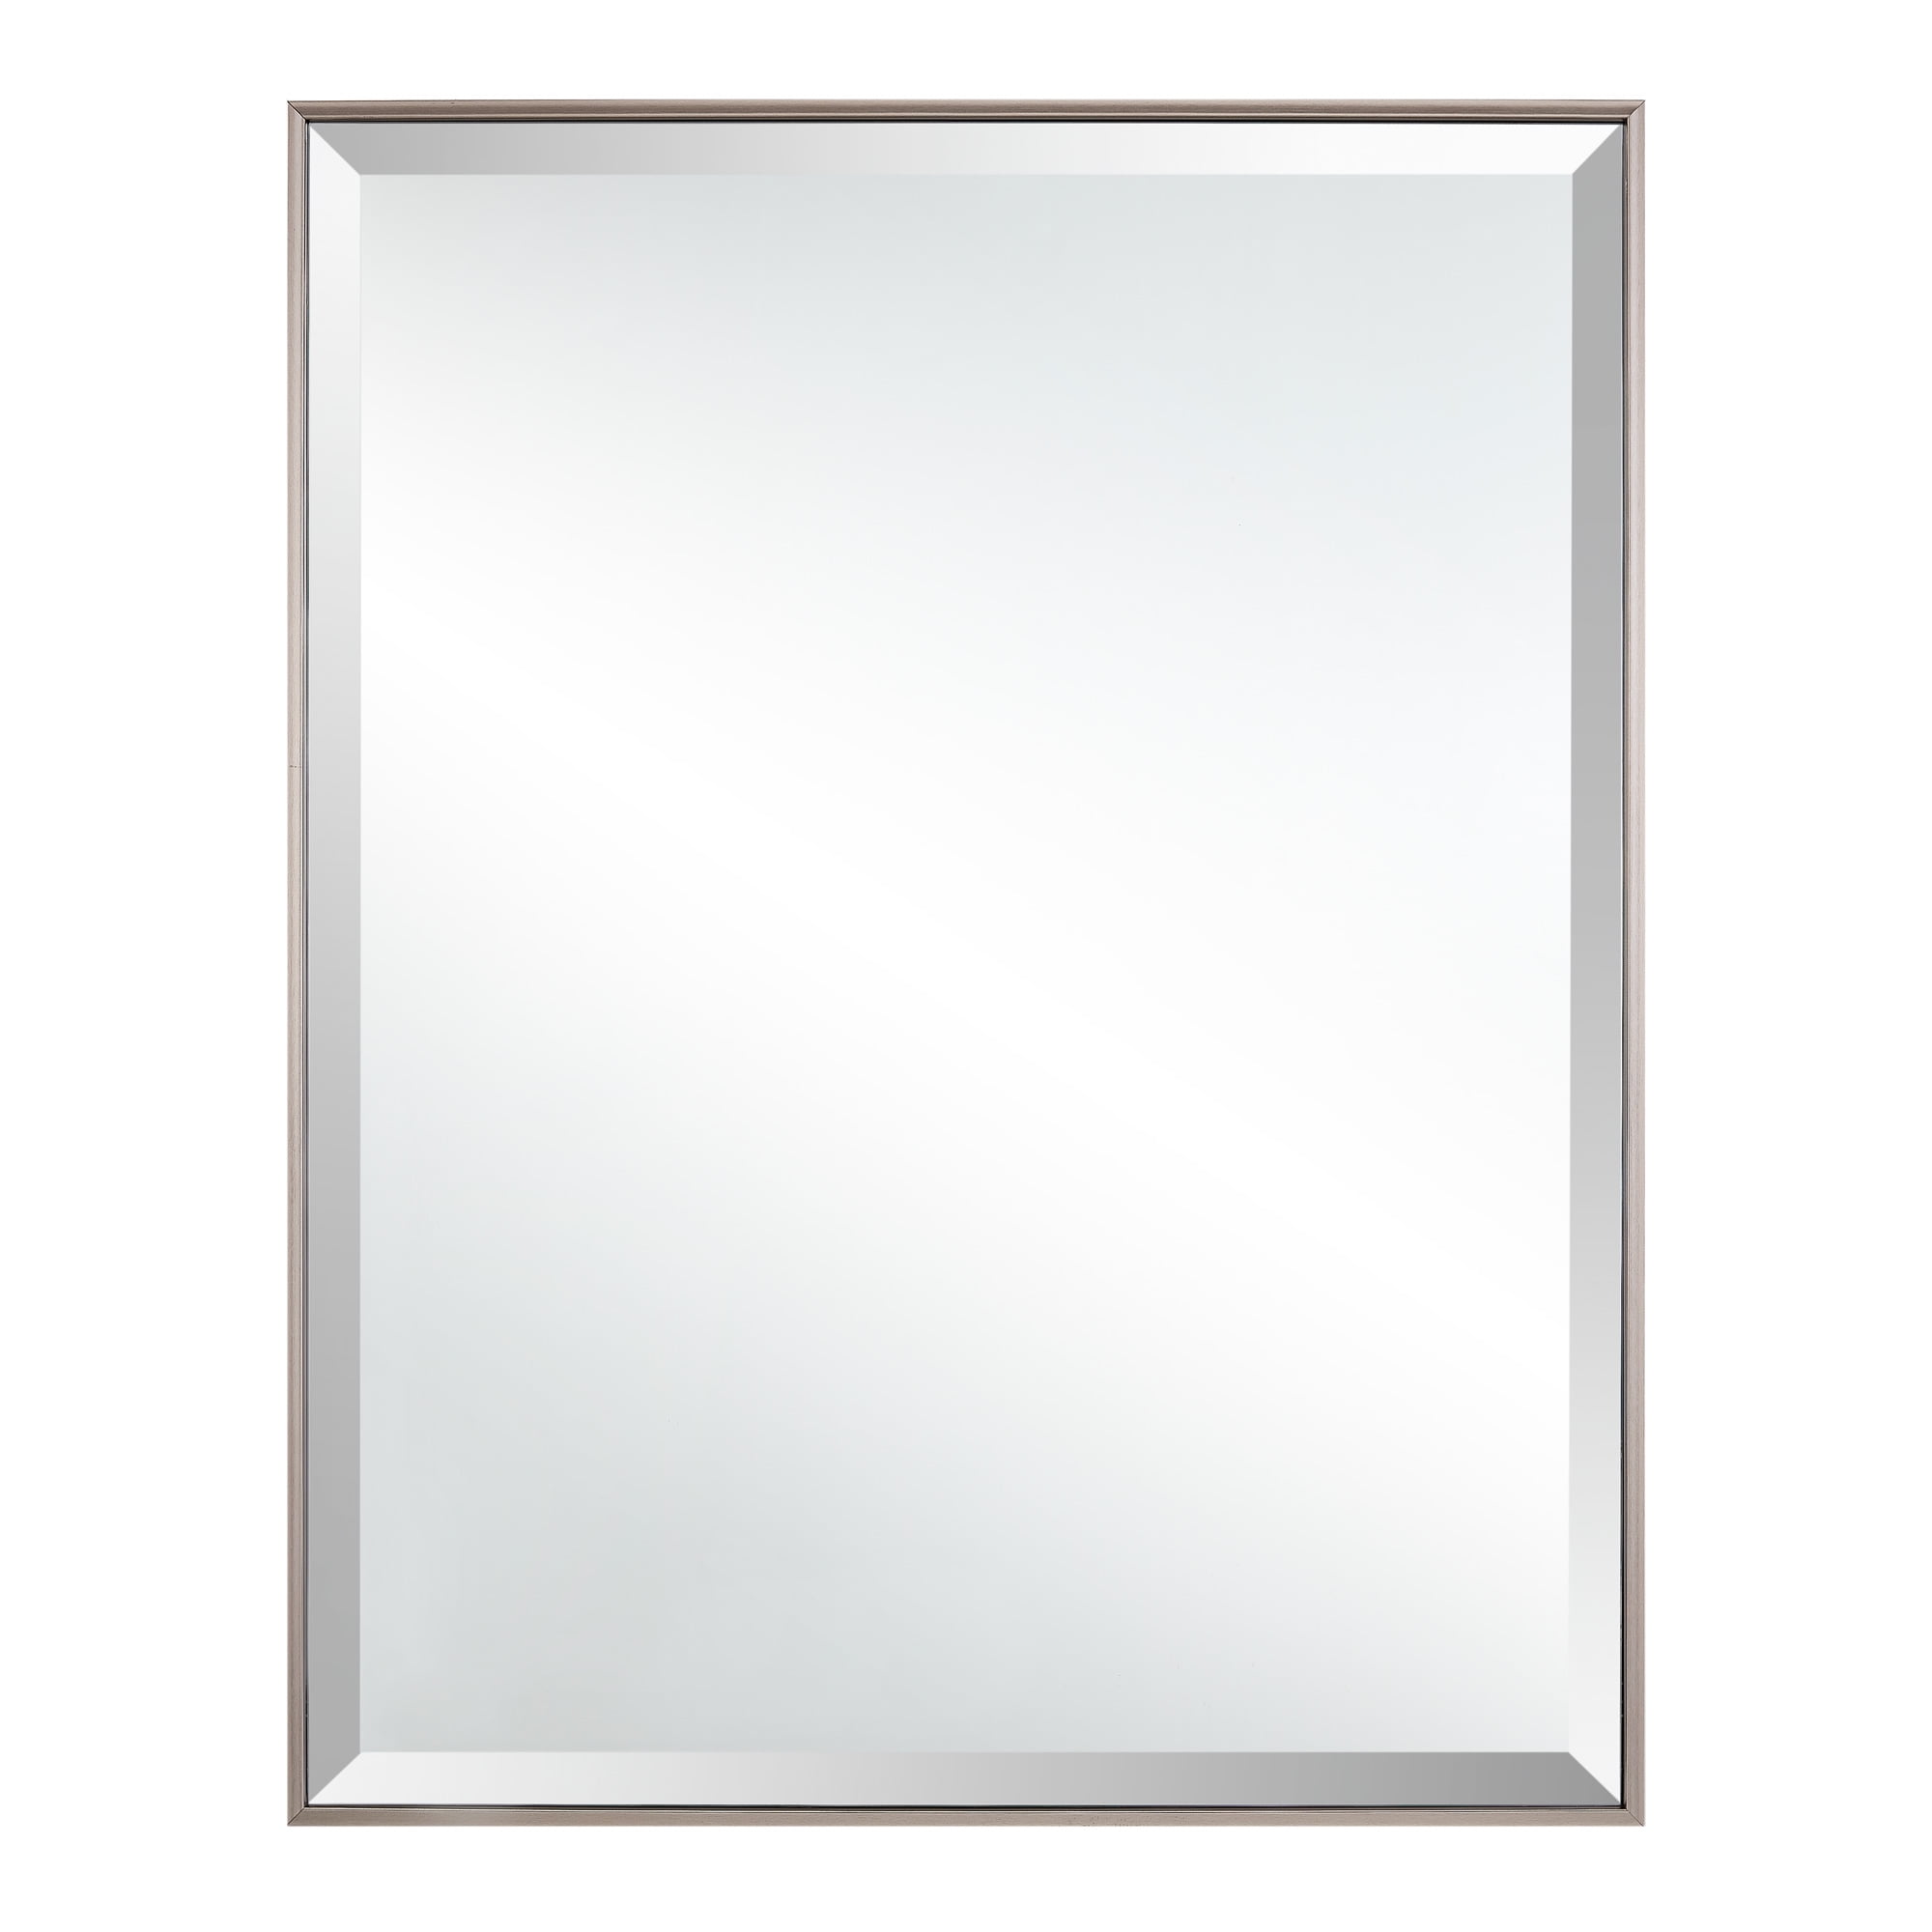 Mainstays Beveled Modern Rectangular Wall Mirror, 23x29, Gunmetal Color